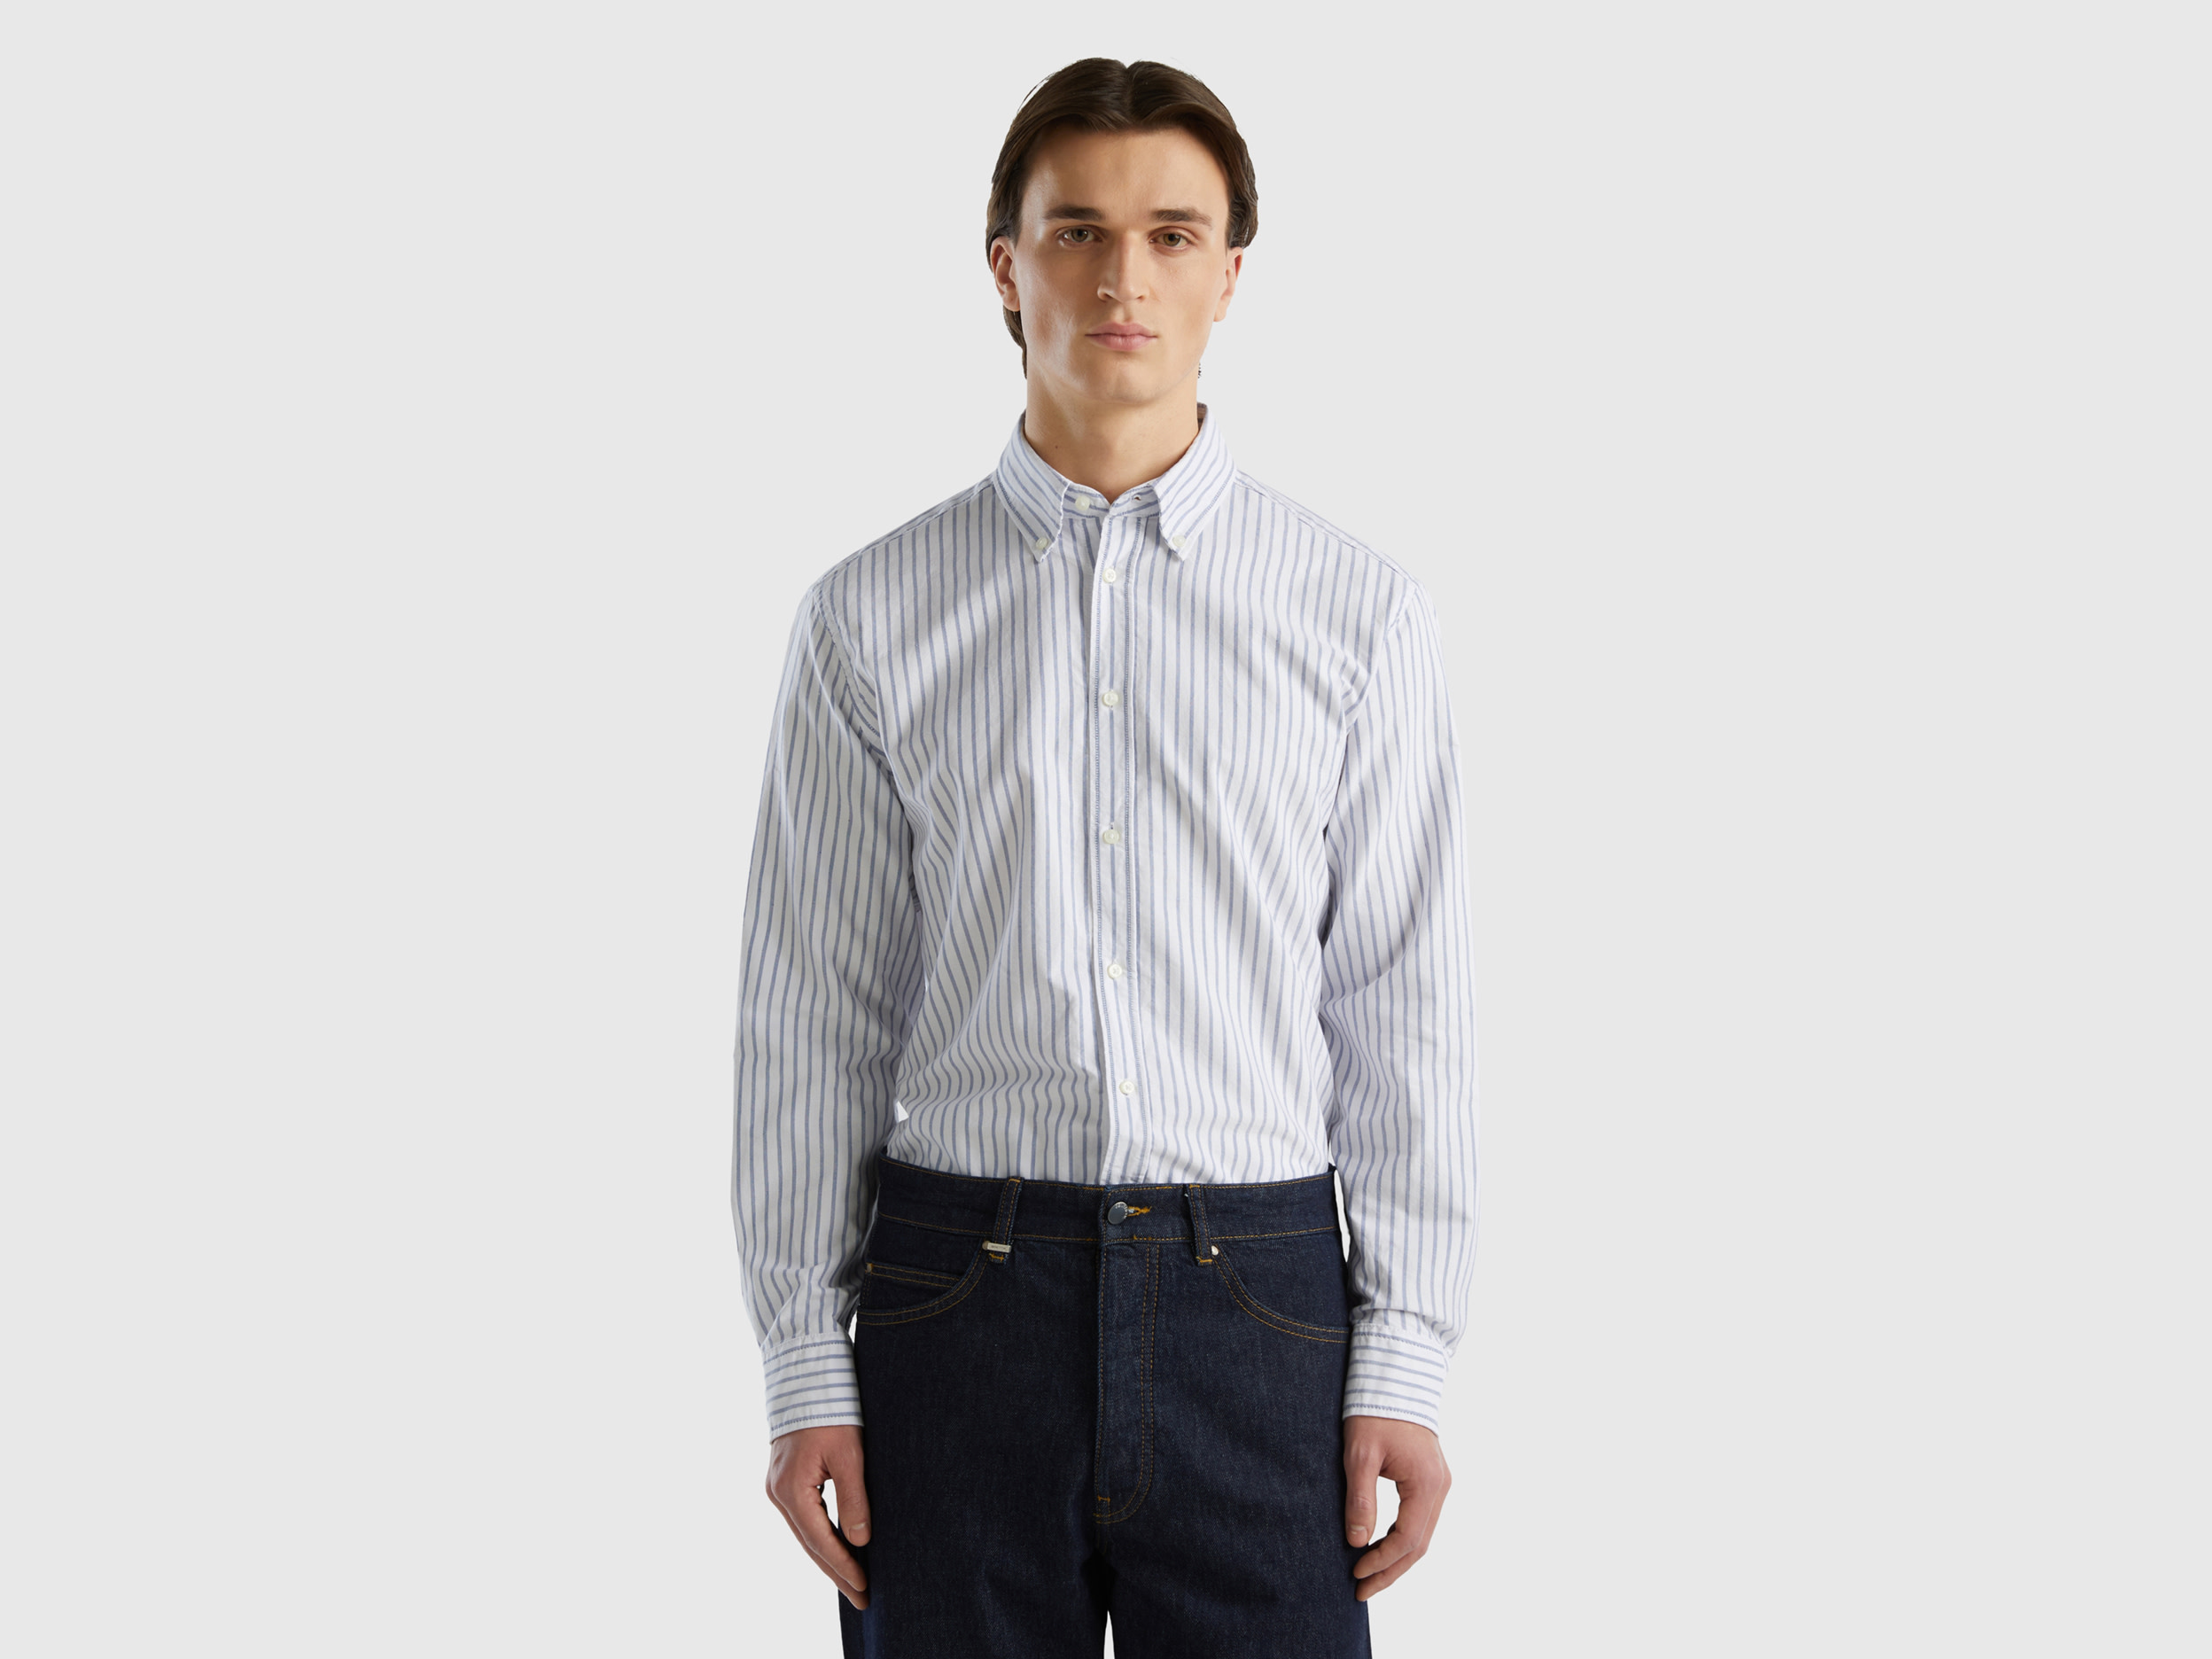 Benetton, 100% Cotton Striped Shirt, size M, Light Blue, Men